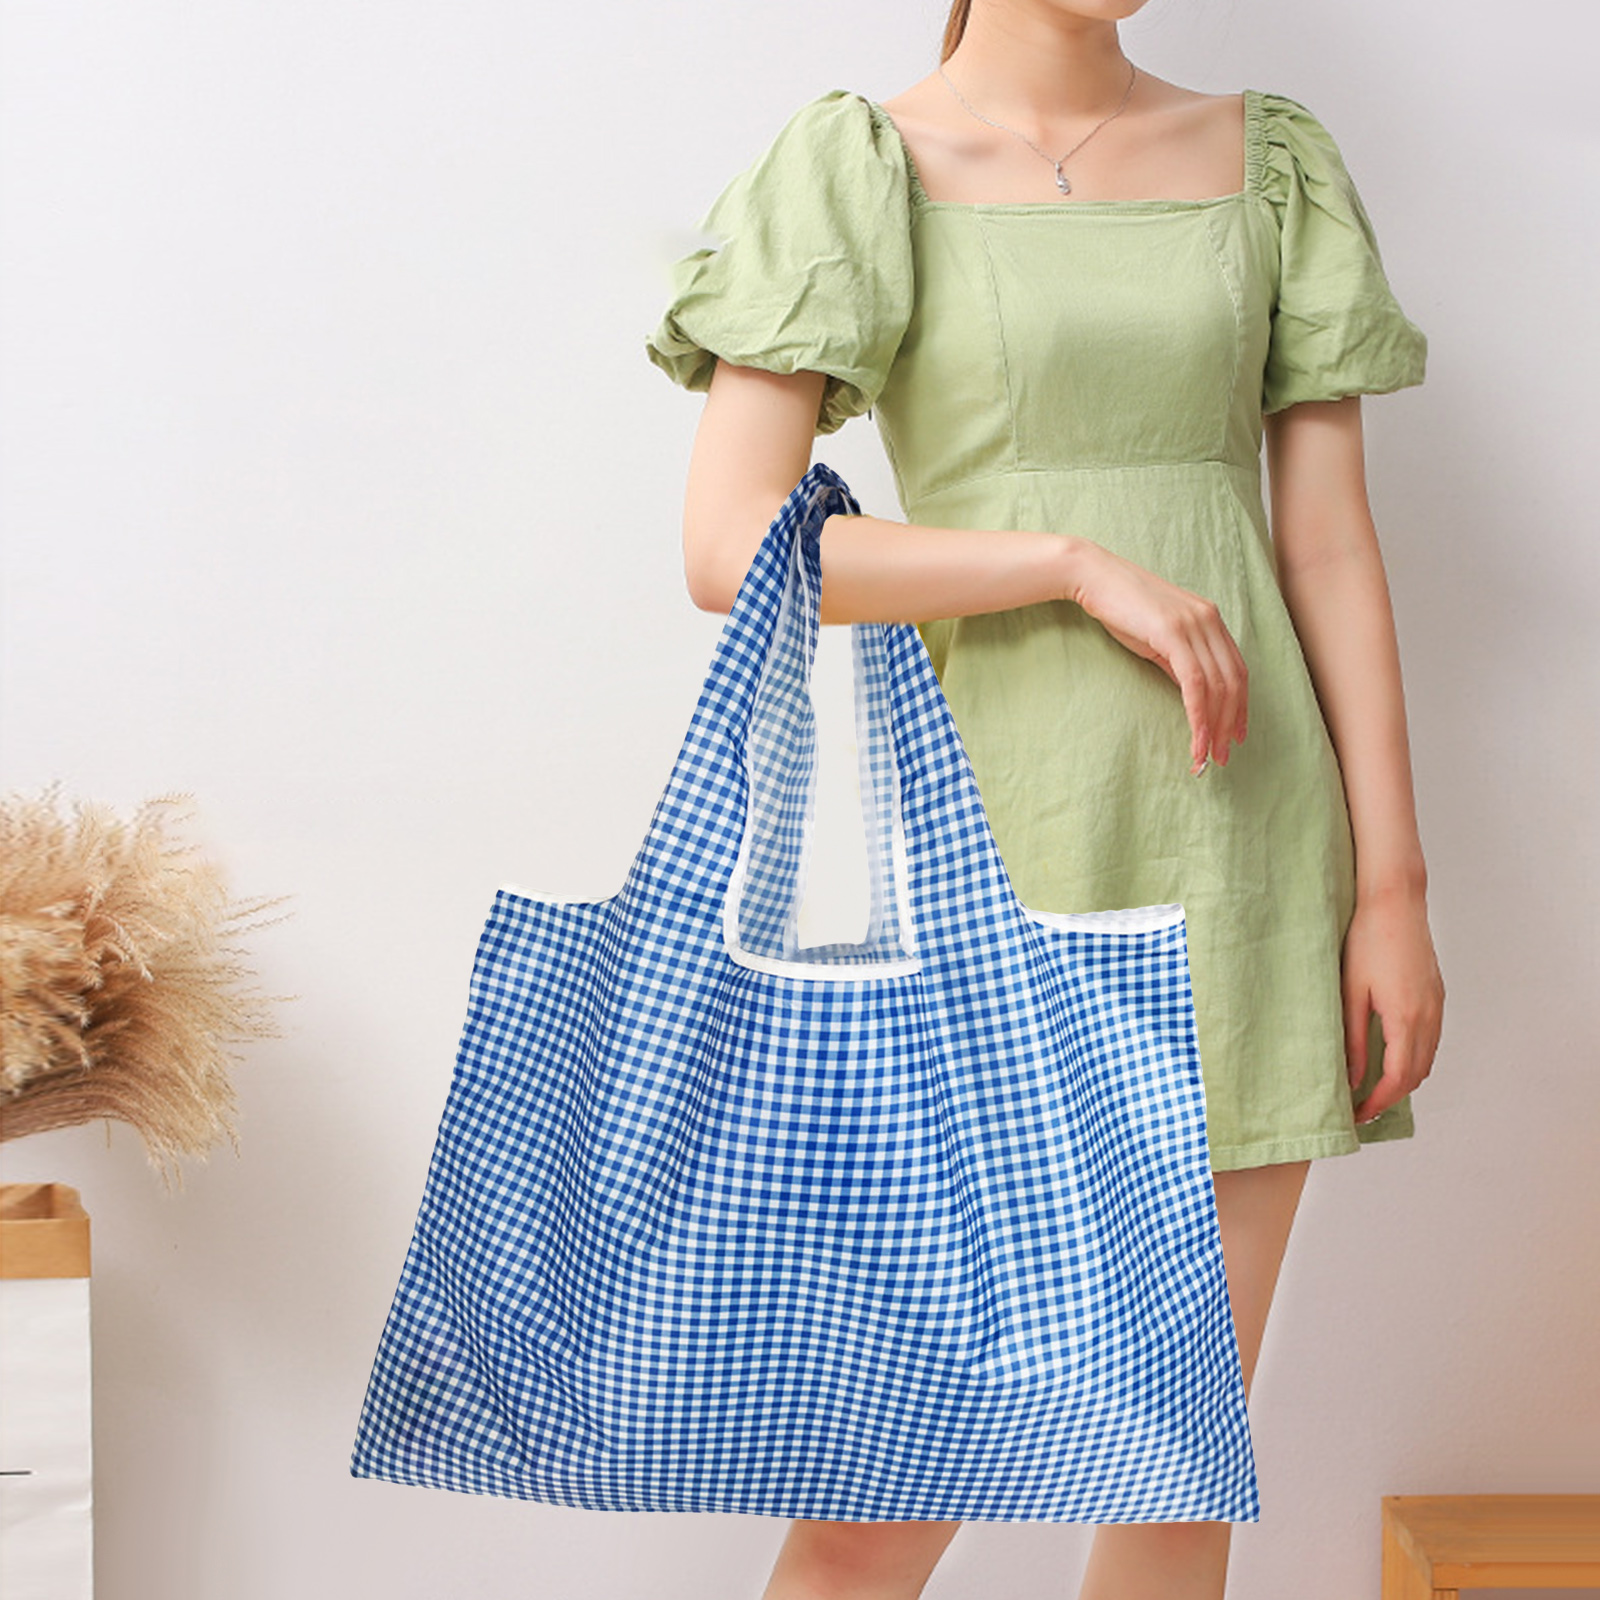 EcoTote Large Foldable Shopping Bag: Waterproof, Reusable & Durable ...